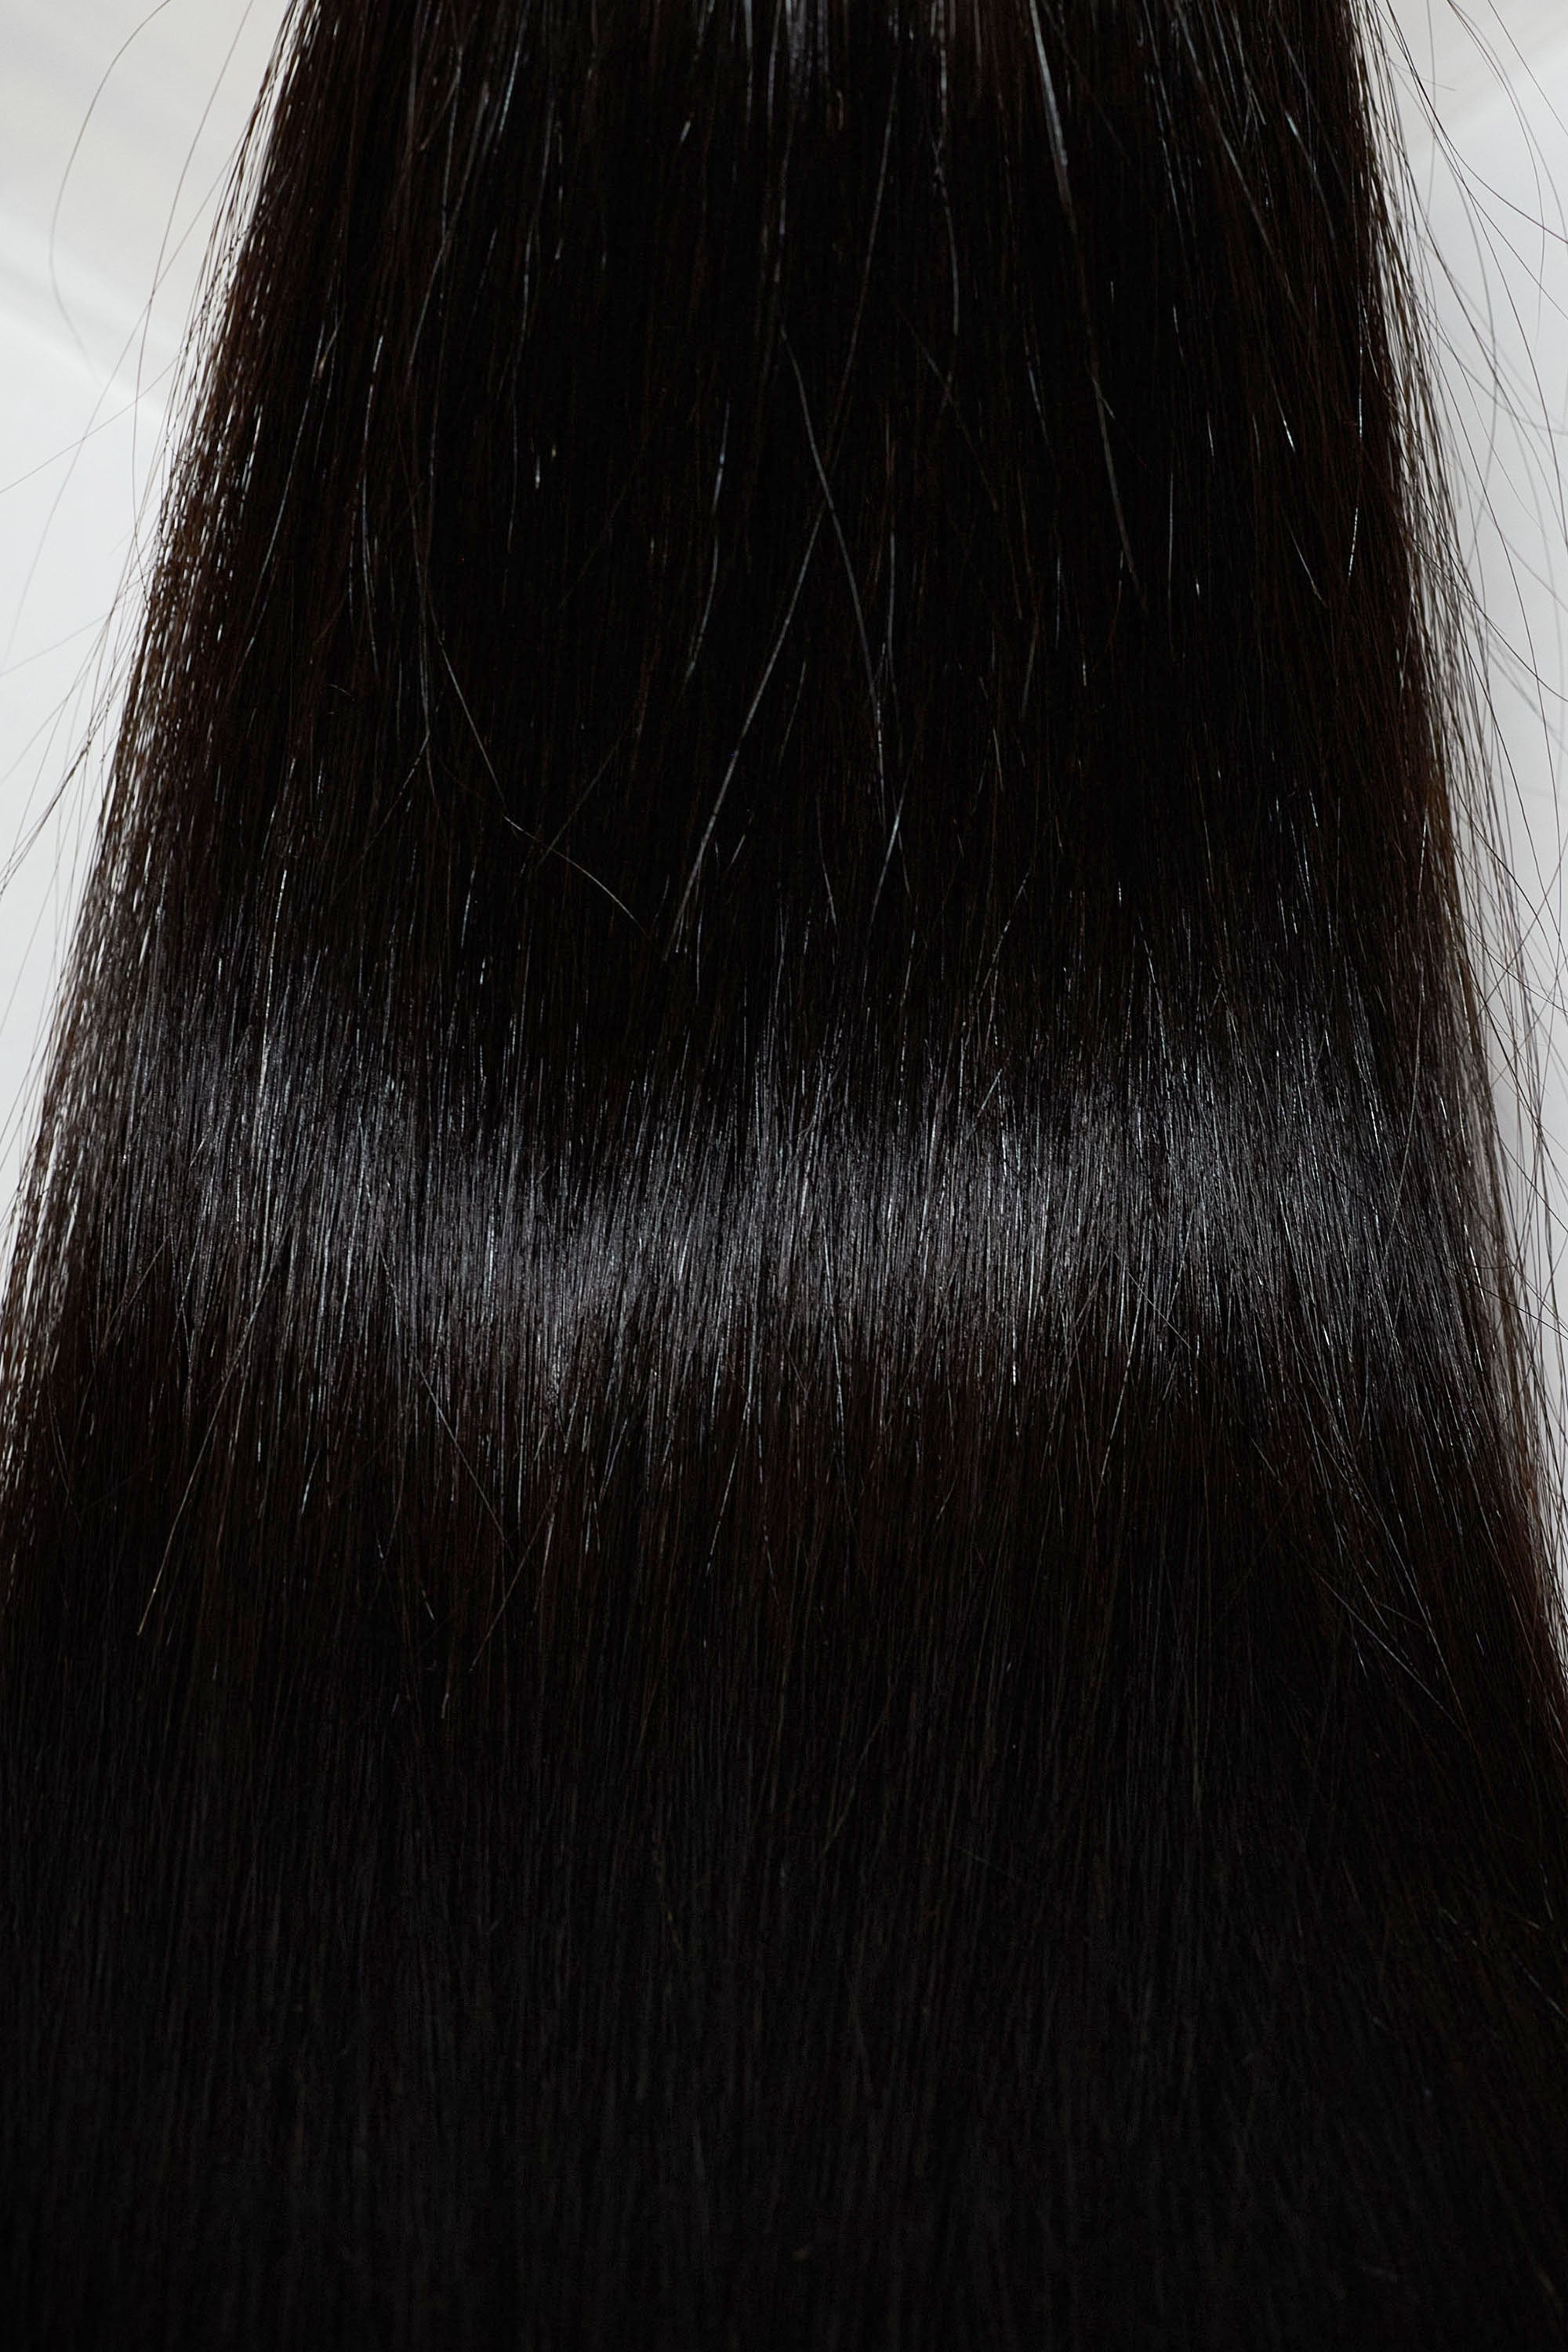 Behair professional Keratin Tip "Premium" 26" (65cm) Natural Straight Jet Black #1 - 25g (Micro - 0.5g each pcs) hair extensions